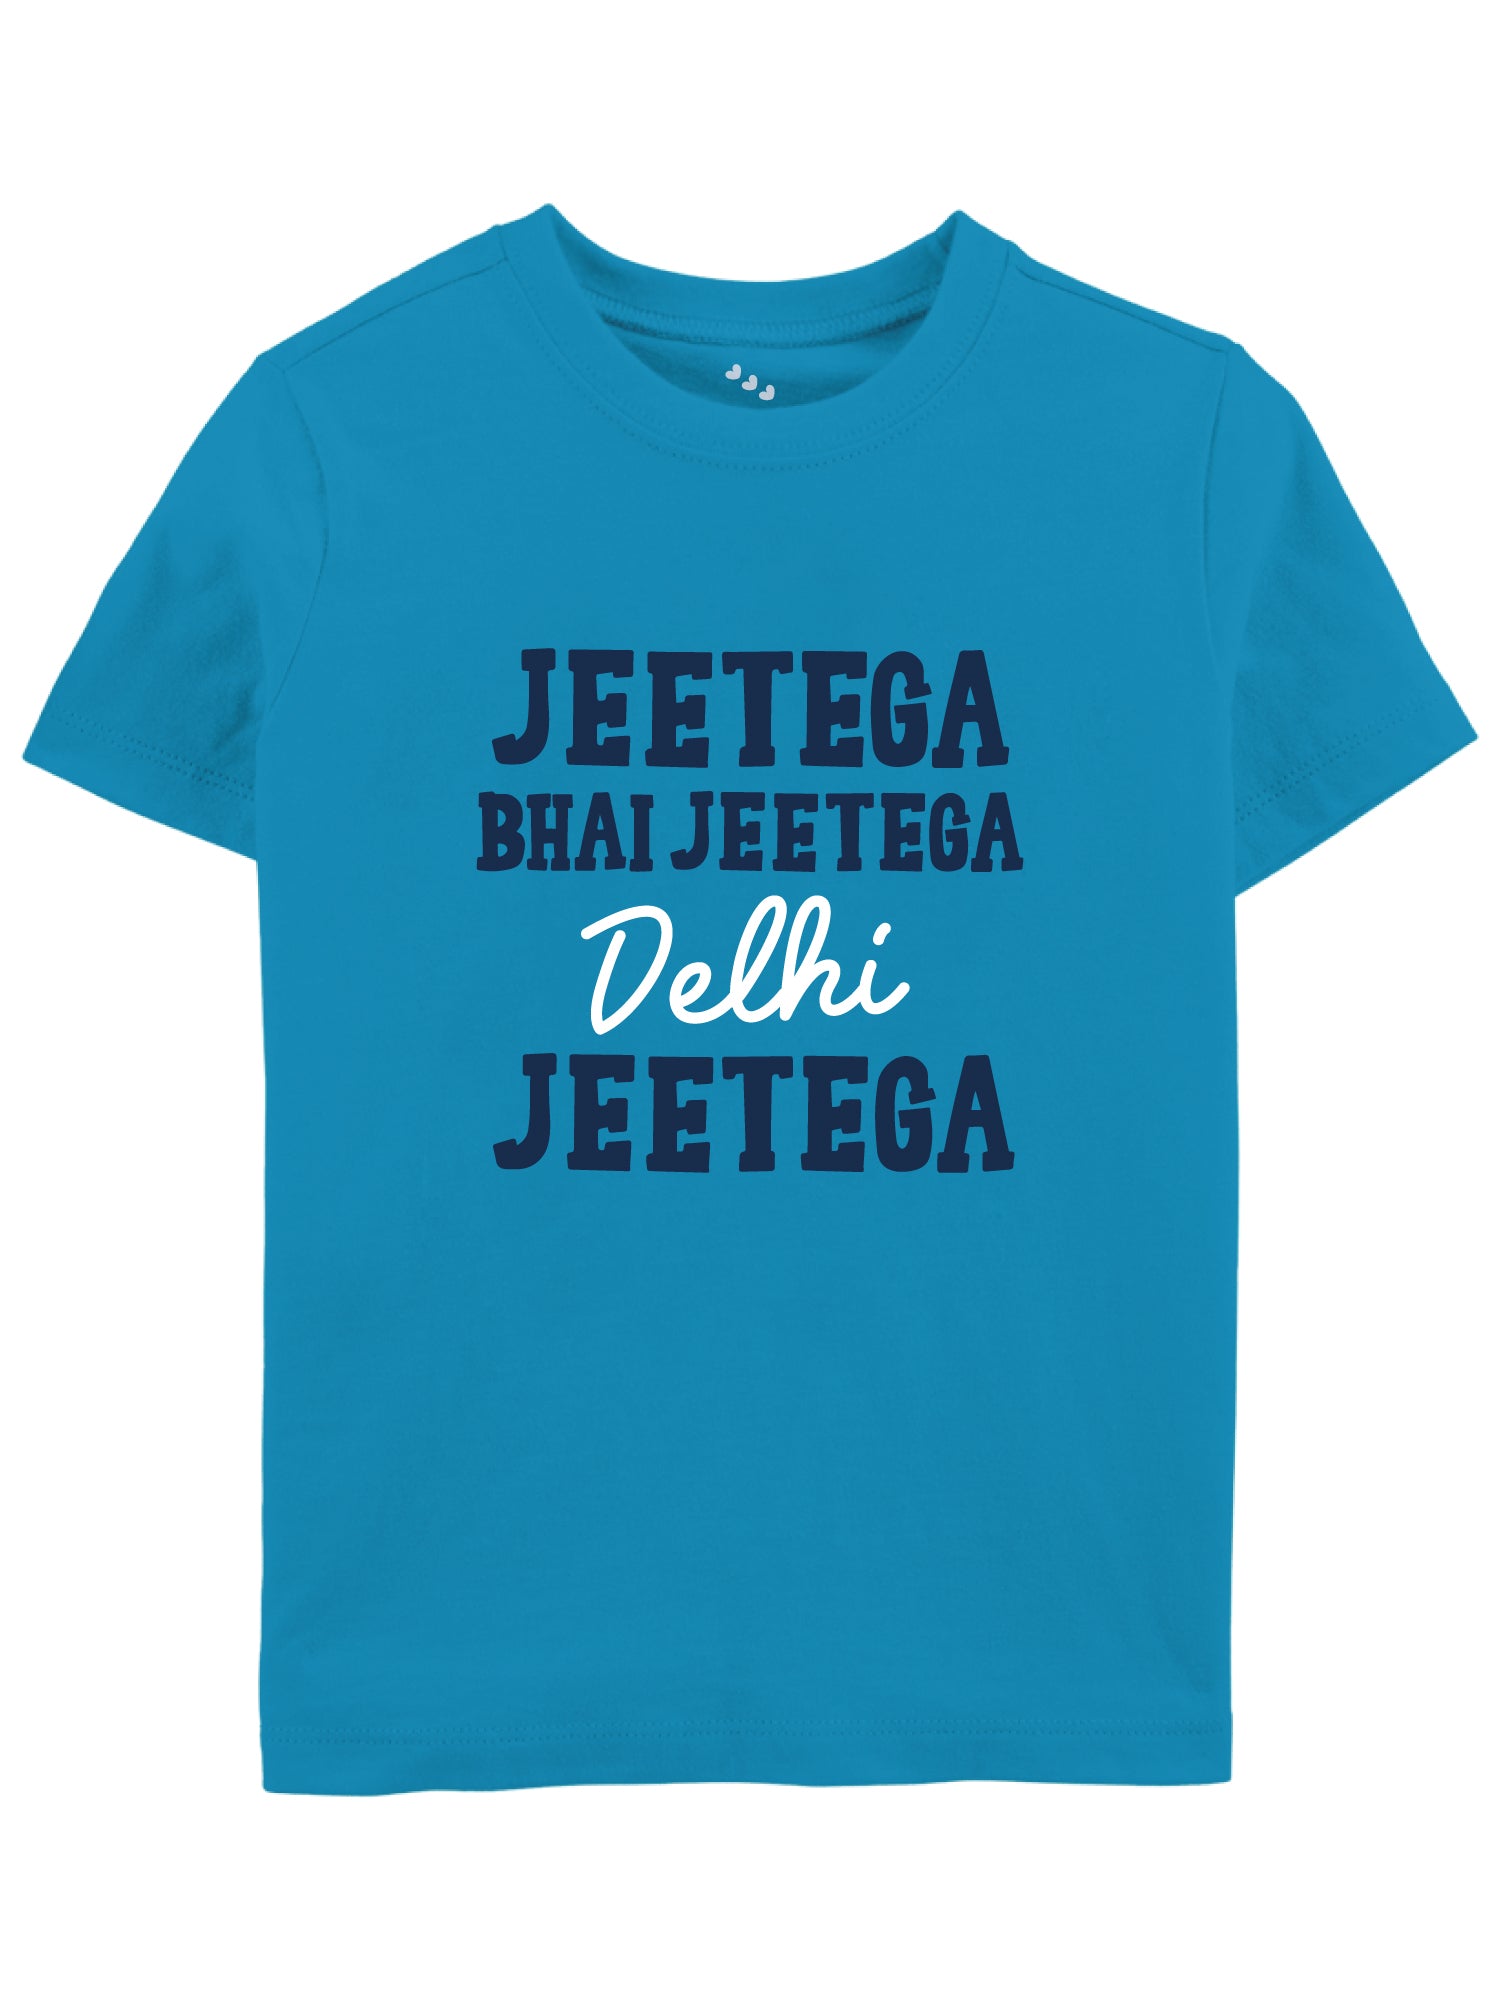 Jeetega Bhai Jeetega Delhi Jeetega - Tee